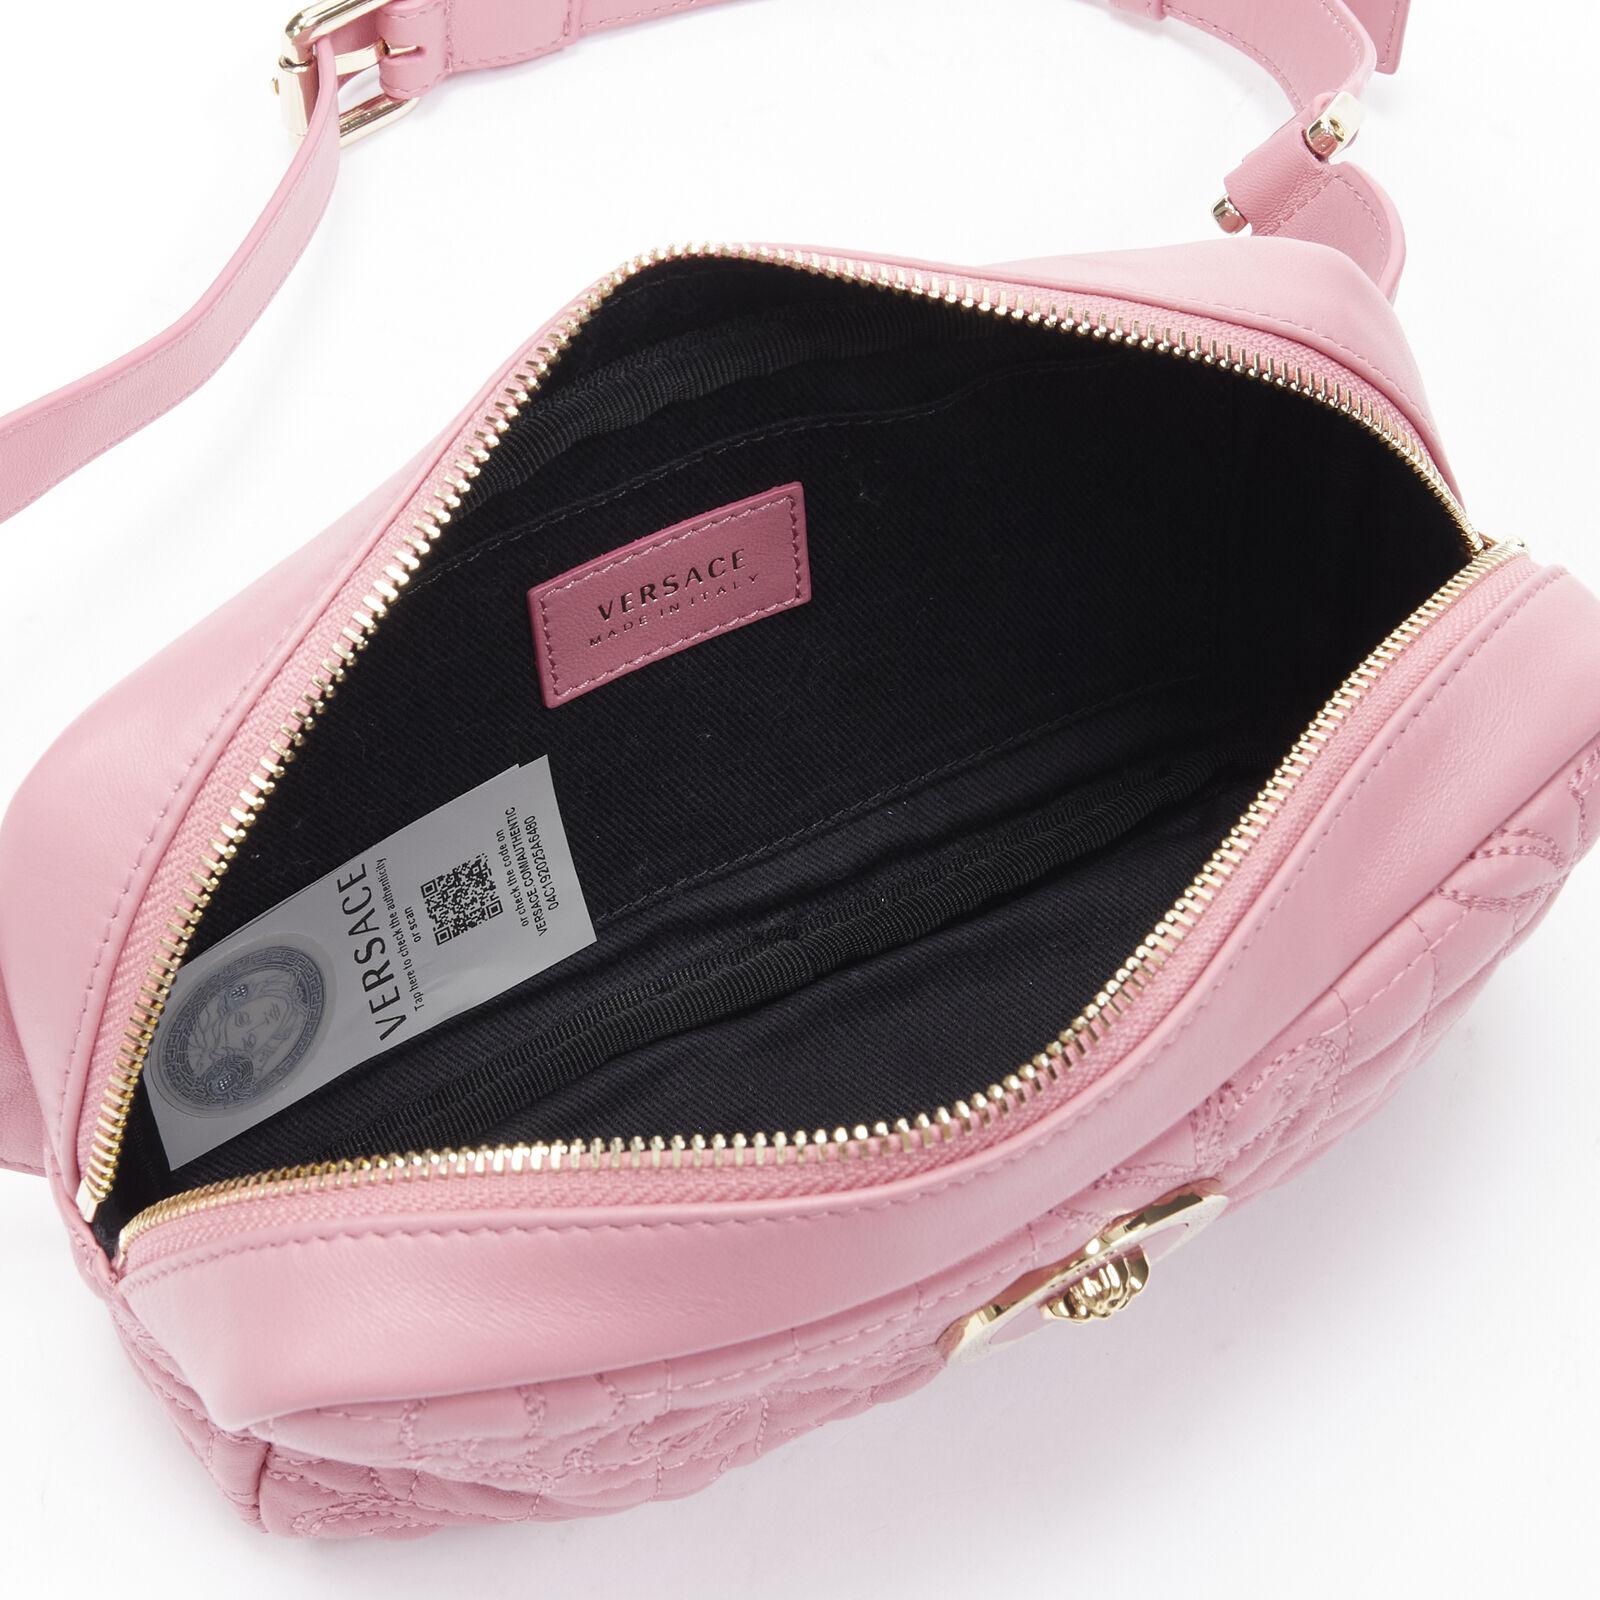 VERSACE Vanitas Barocco pink quilted leather gold Medusa crossbody waist bag 5